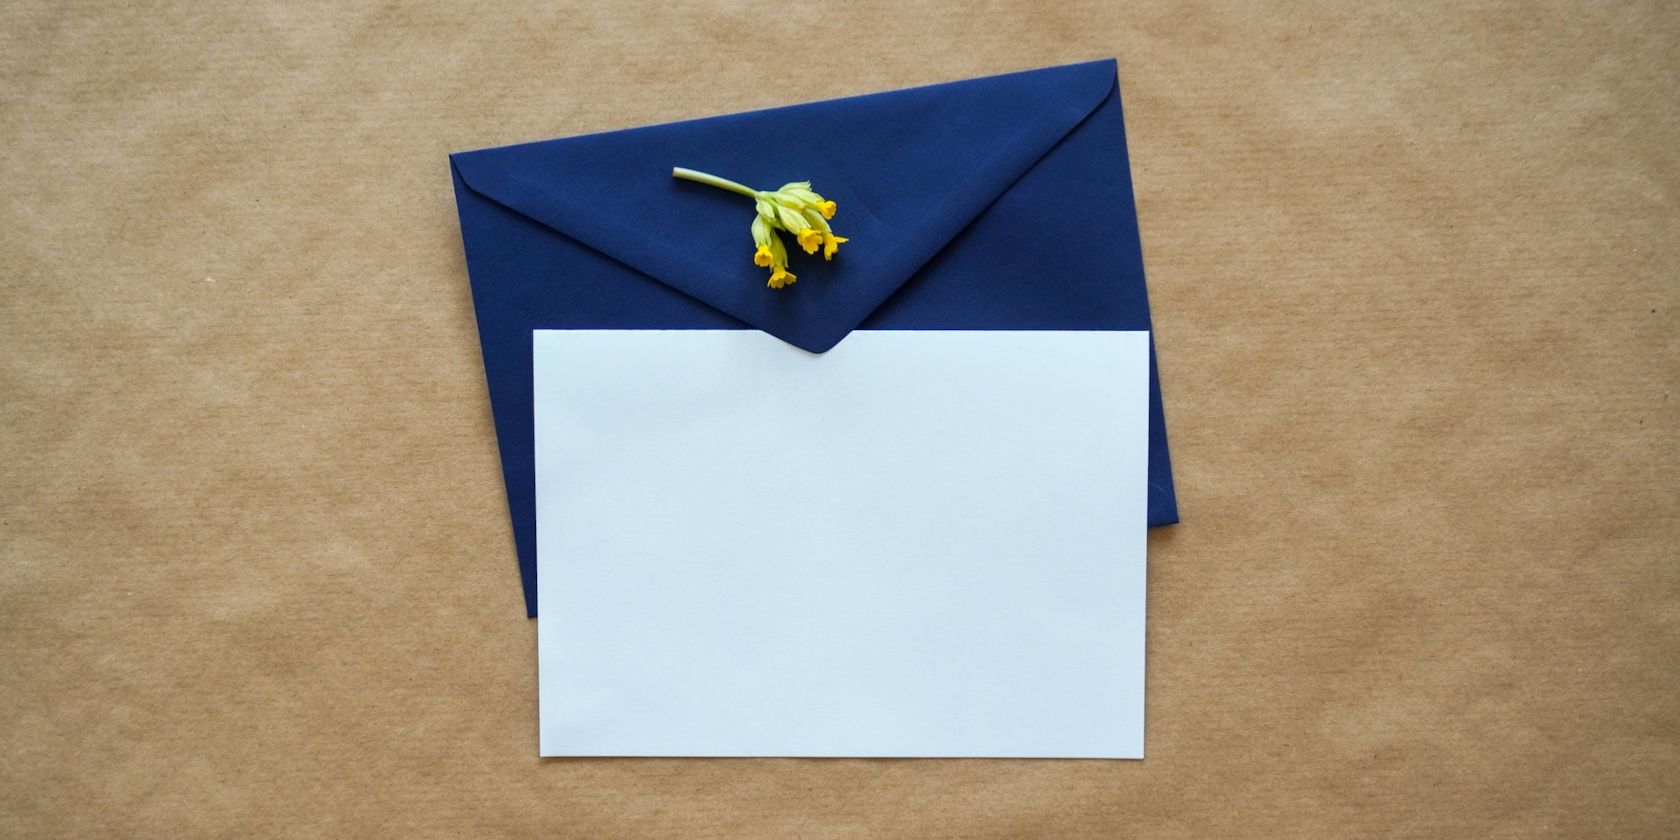 White Paper and Blue Envelope for Formal Letter